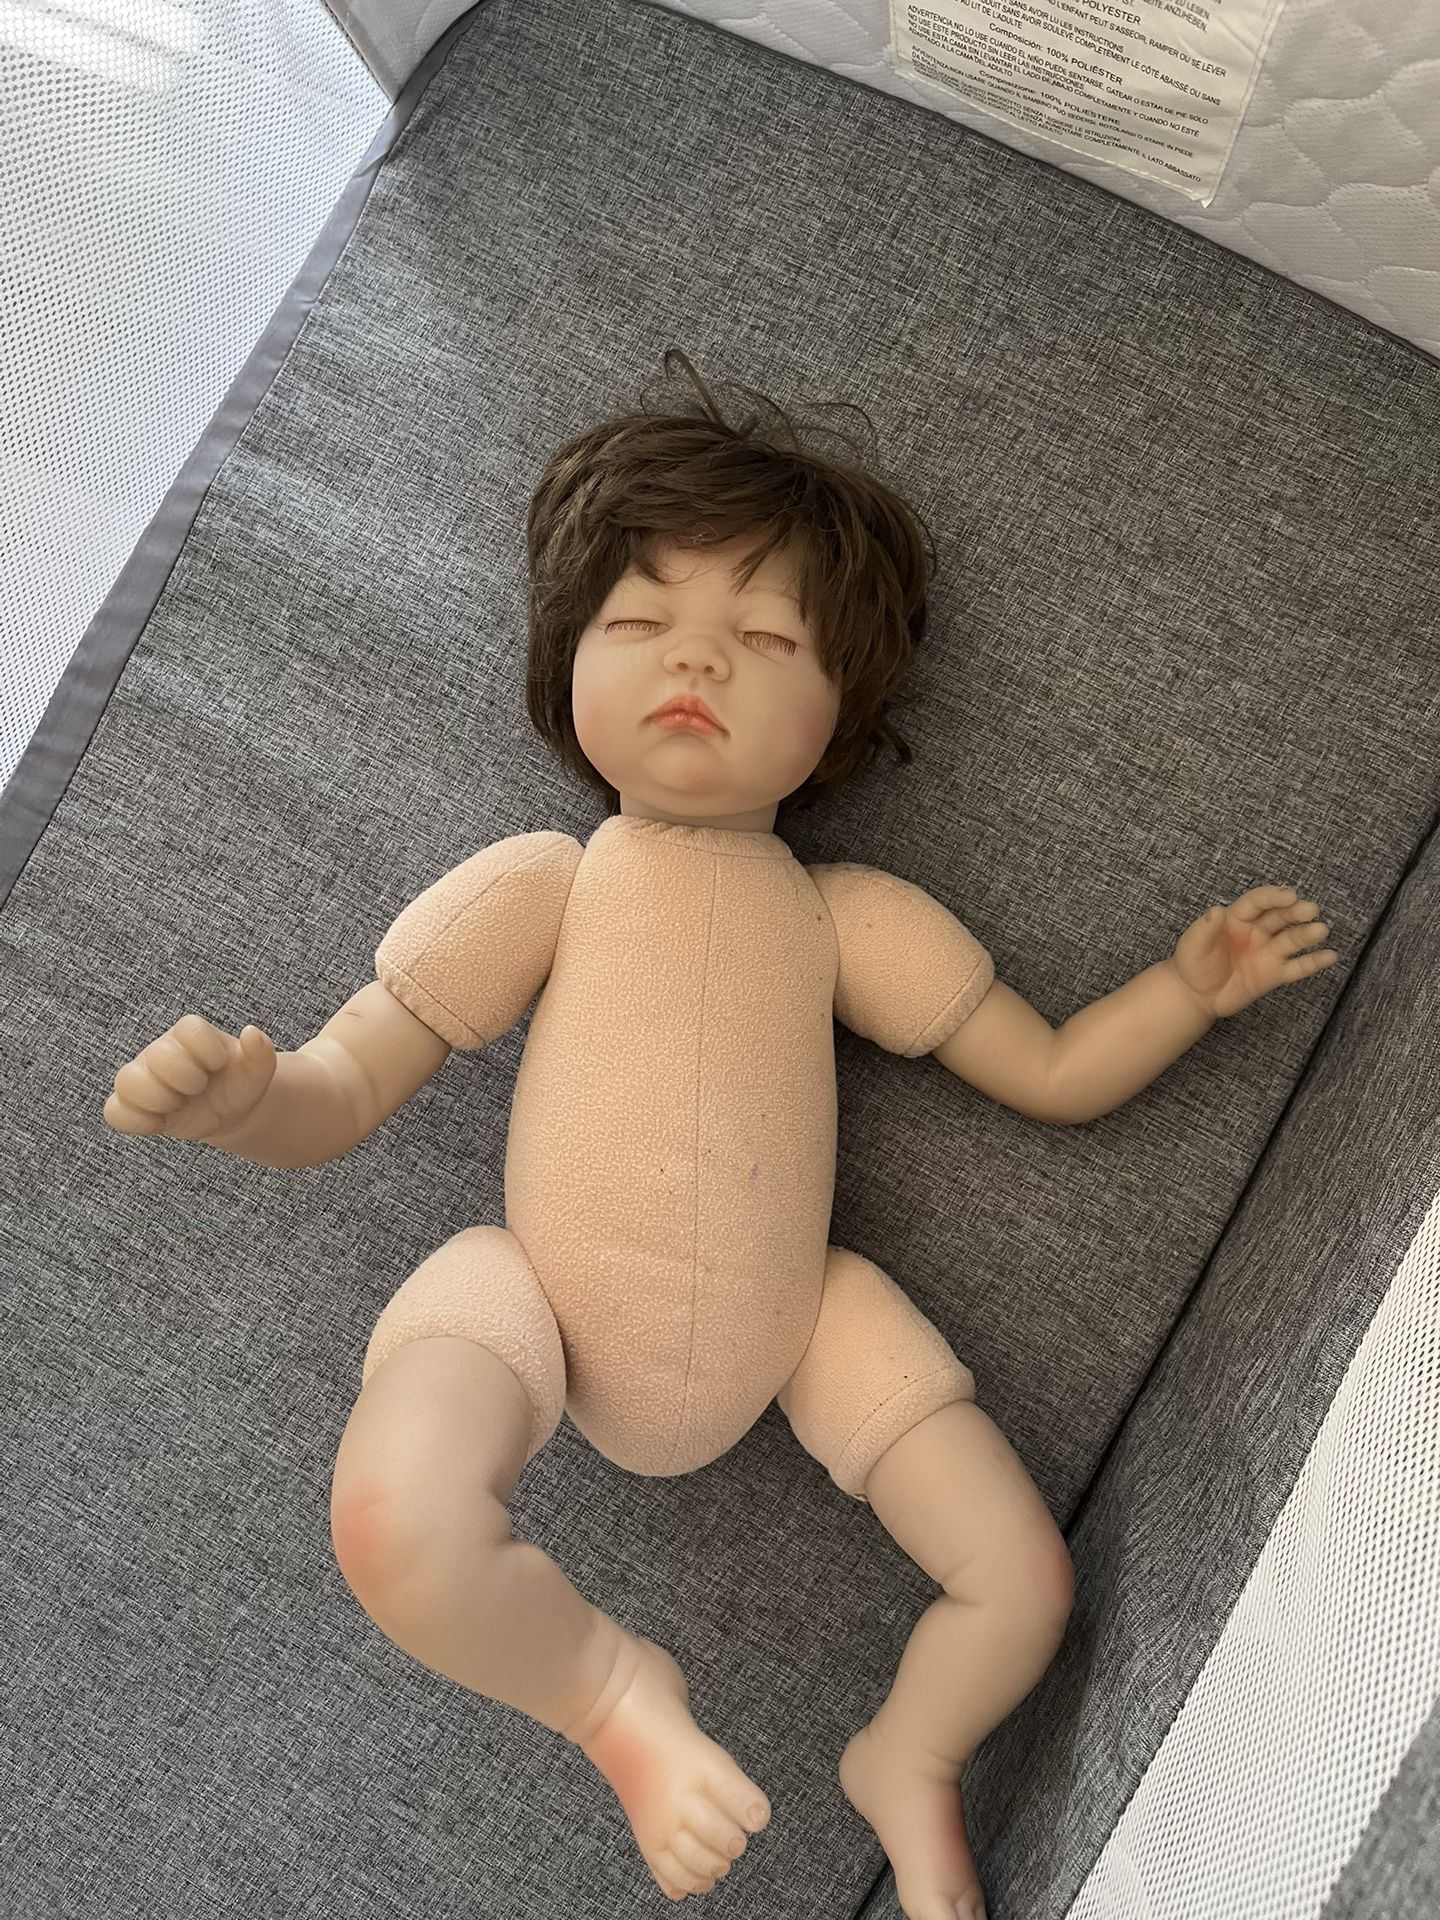 Reborn, Sleeping, Baby Doll